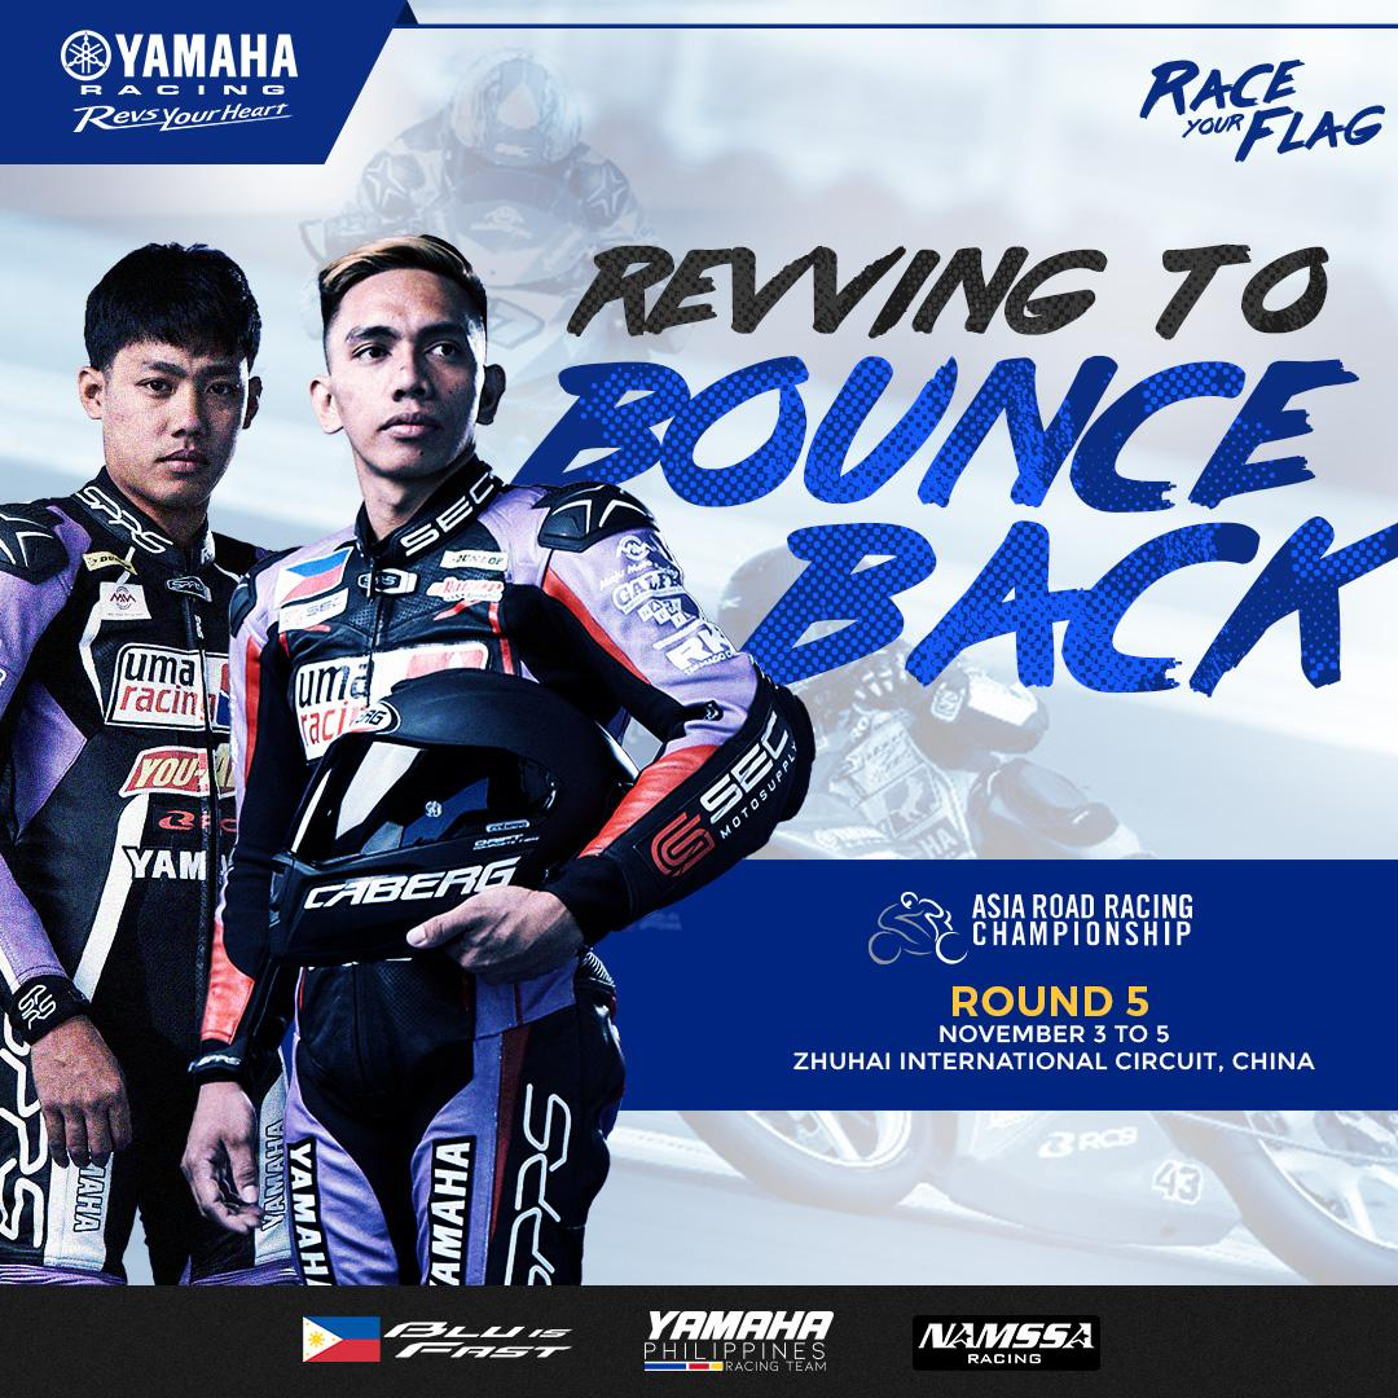 Photo source: Yamaha Racing Philippines